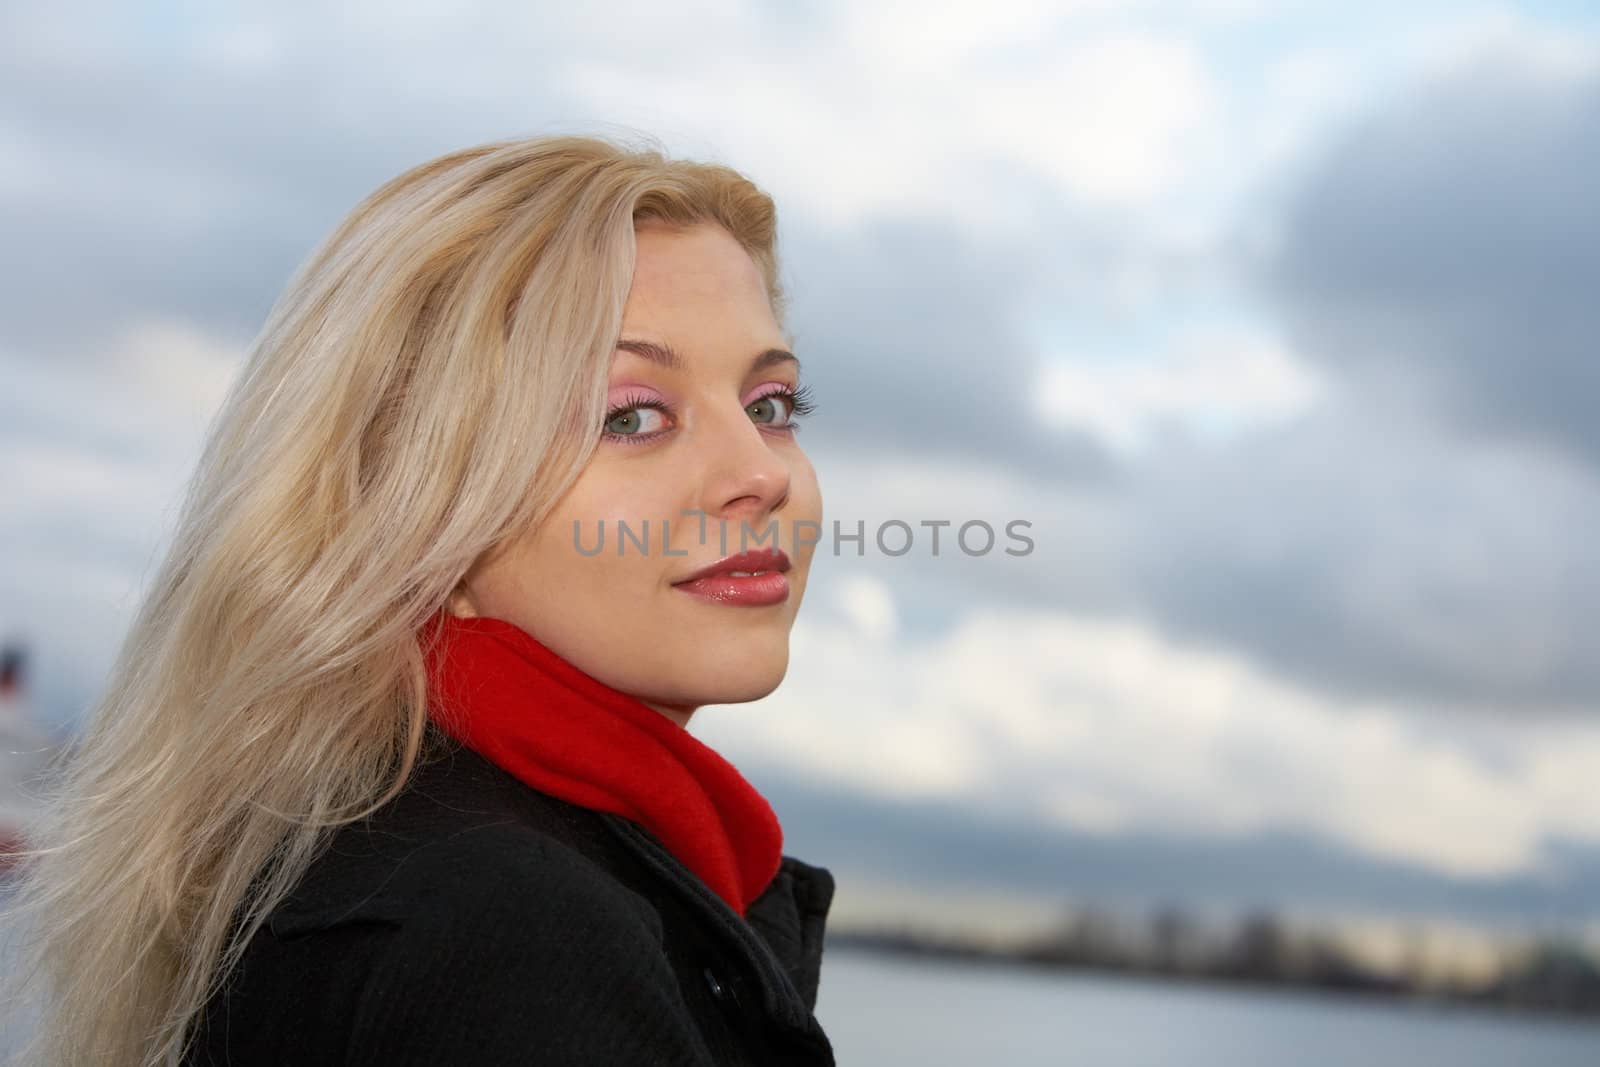 Young woman looking at camera outdoors